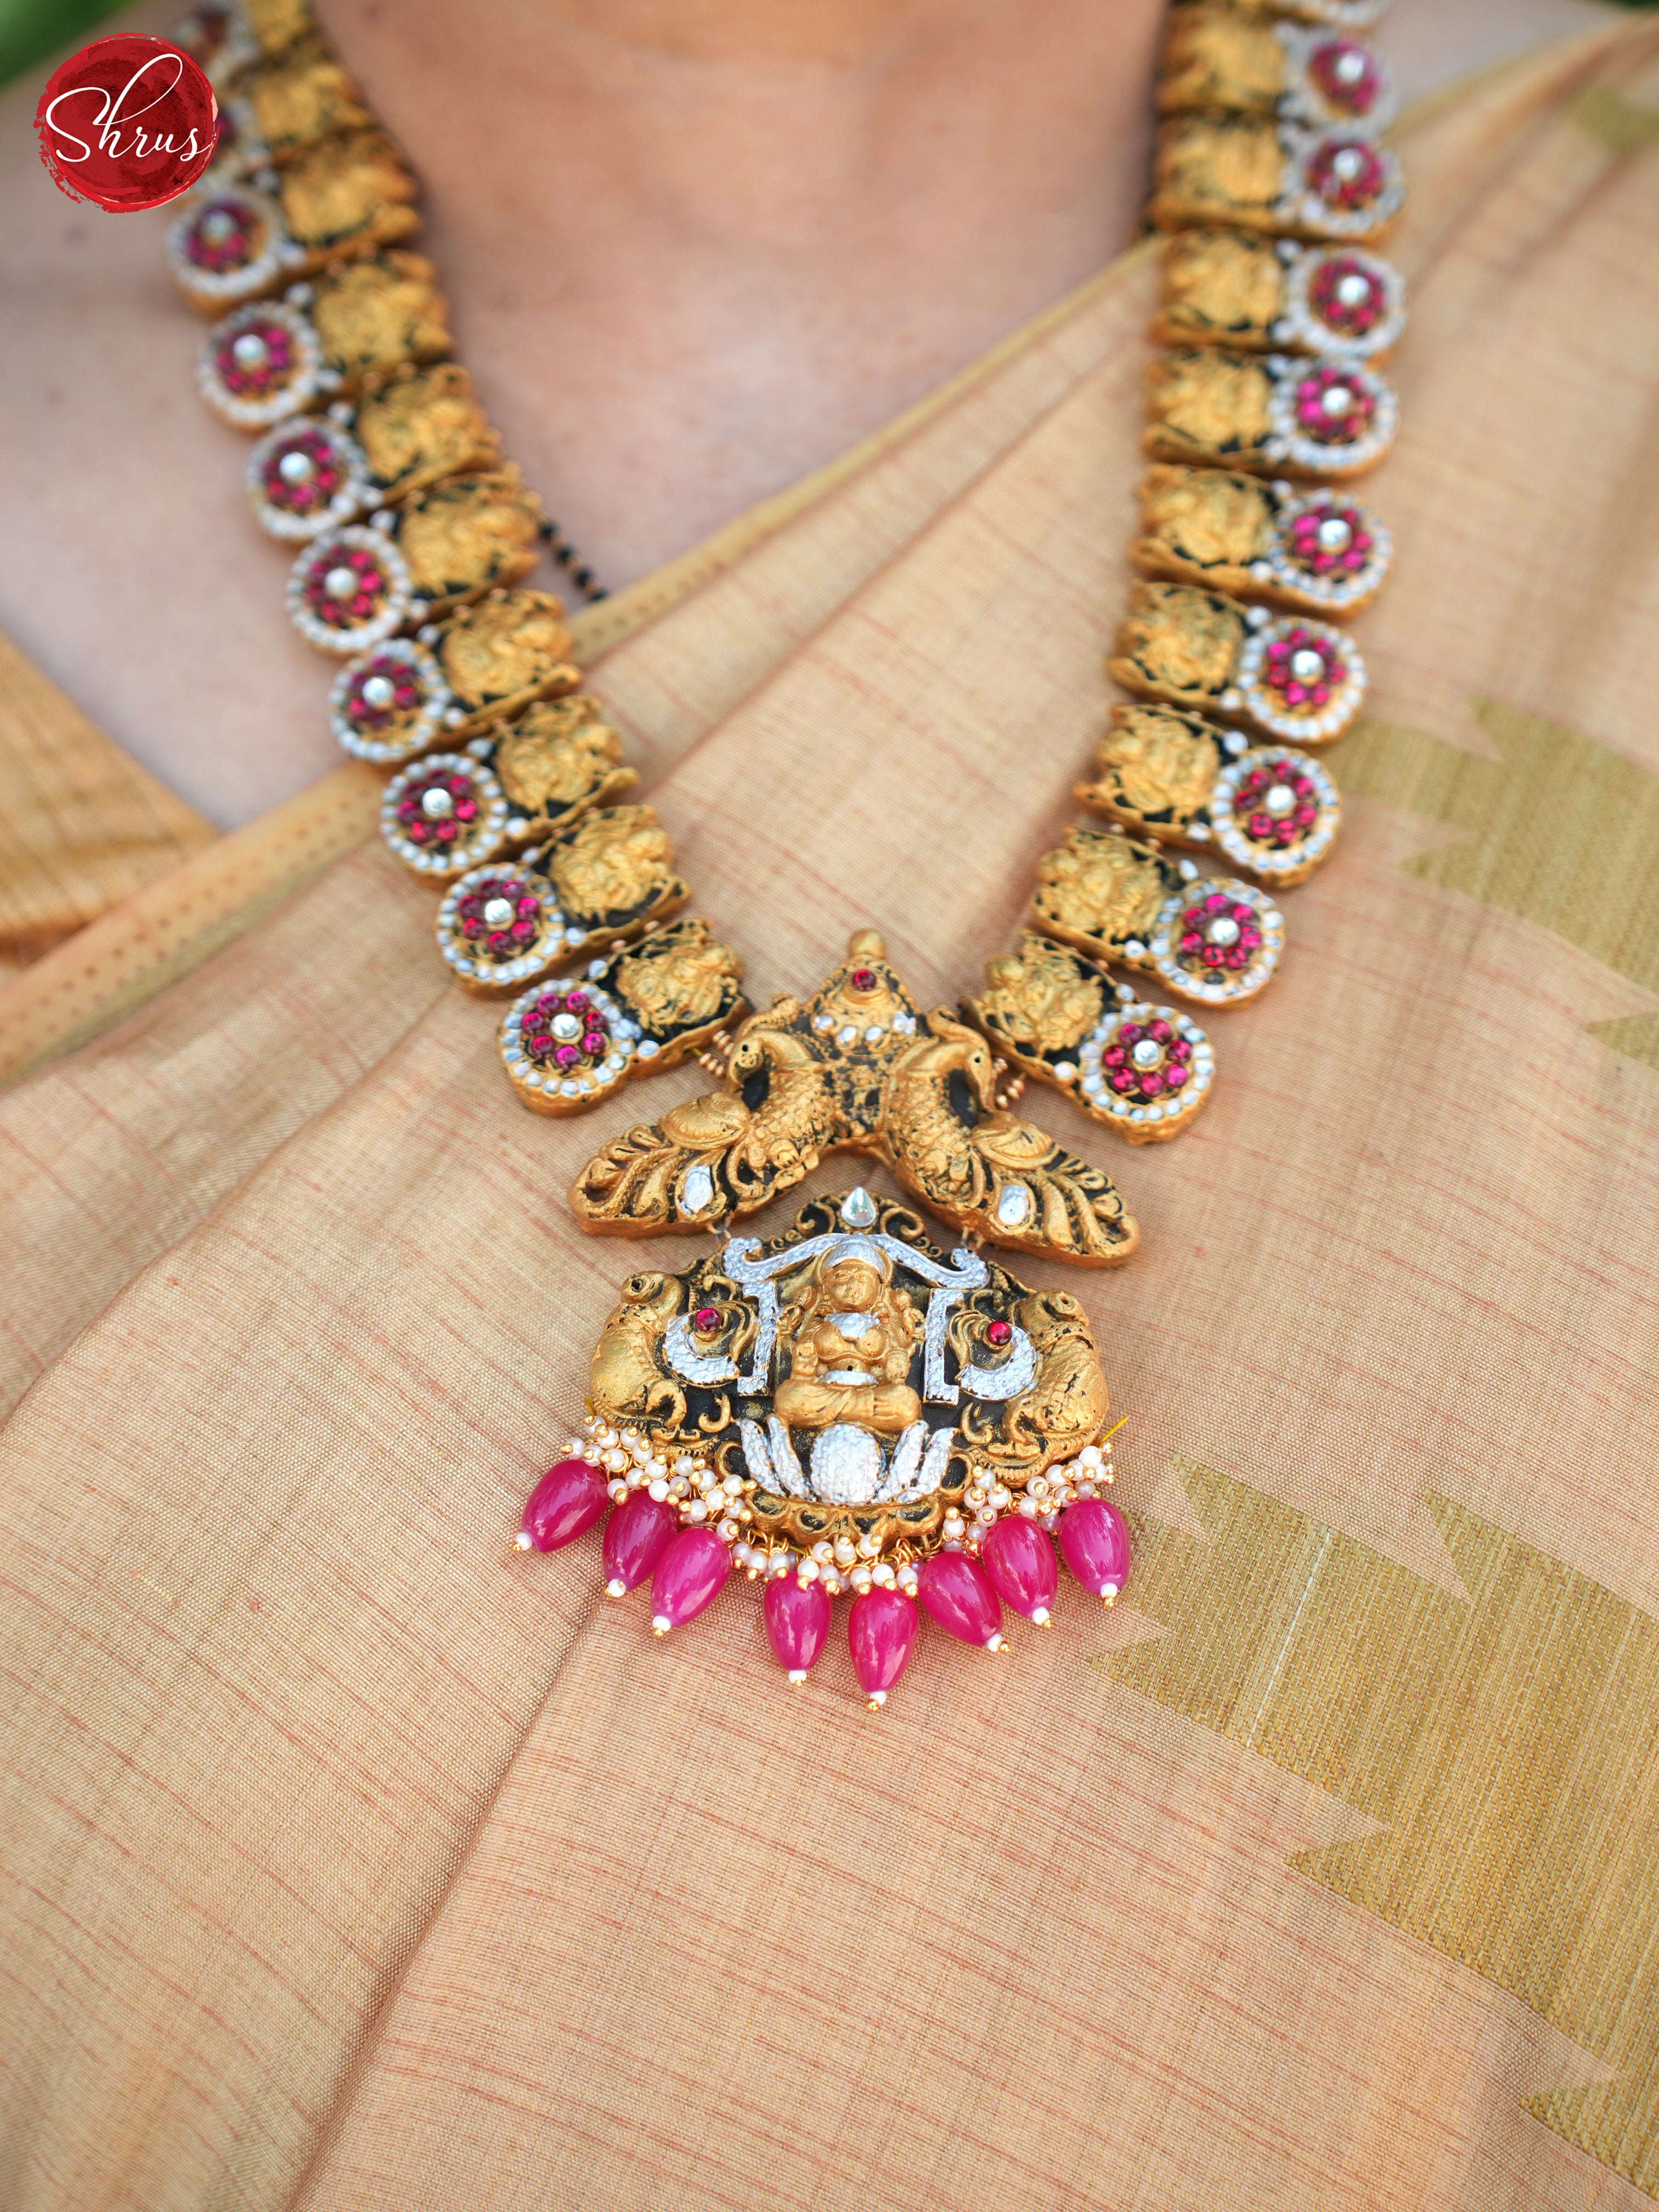 Lakshmi , peacock pendant Terra cotta Necklace with earring - Neck Piece & Earrings - Shop on ShrusEternity.com